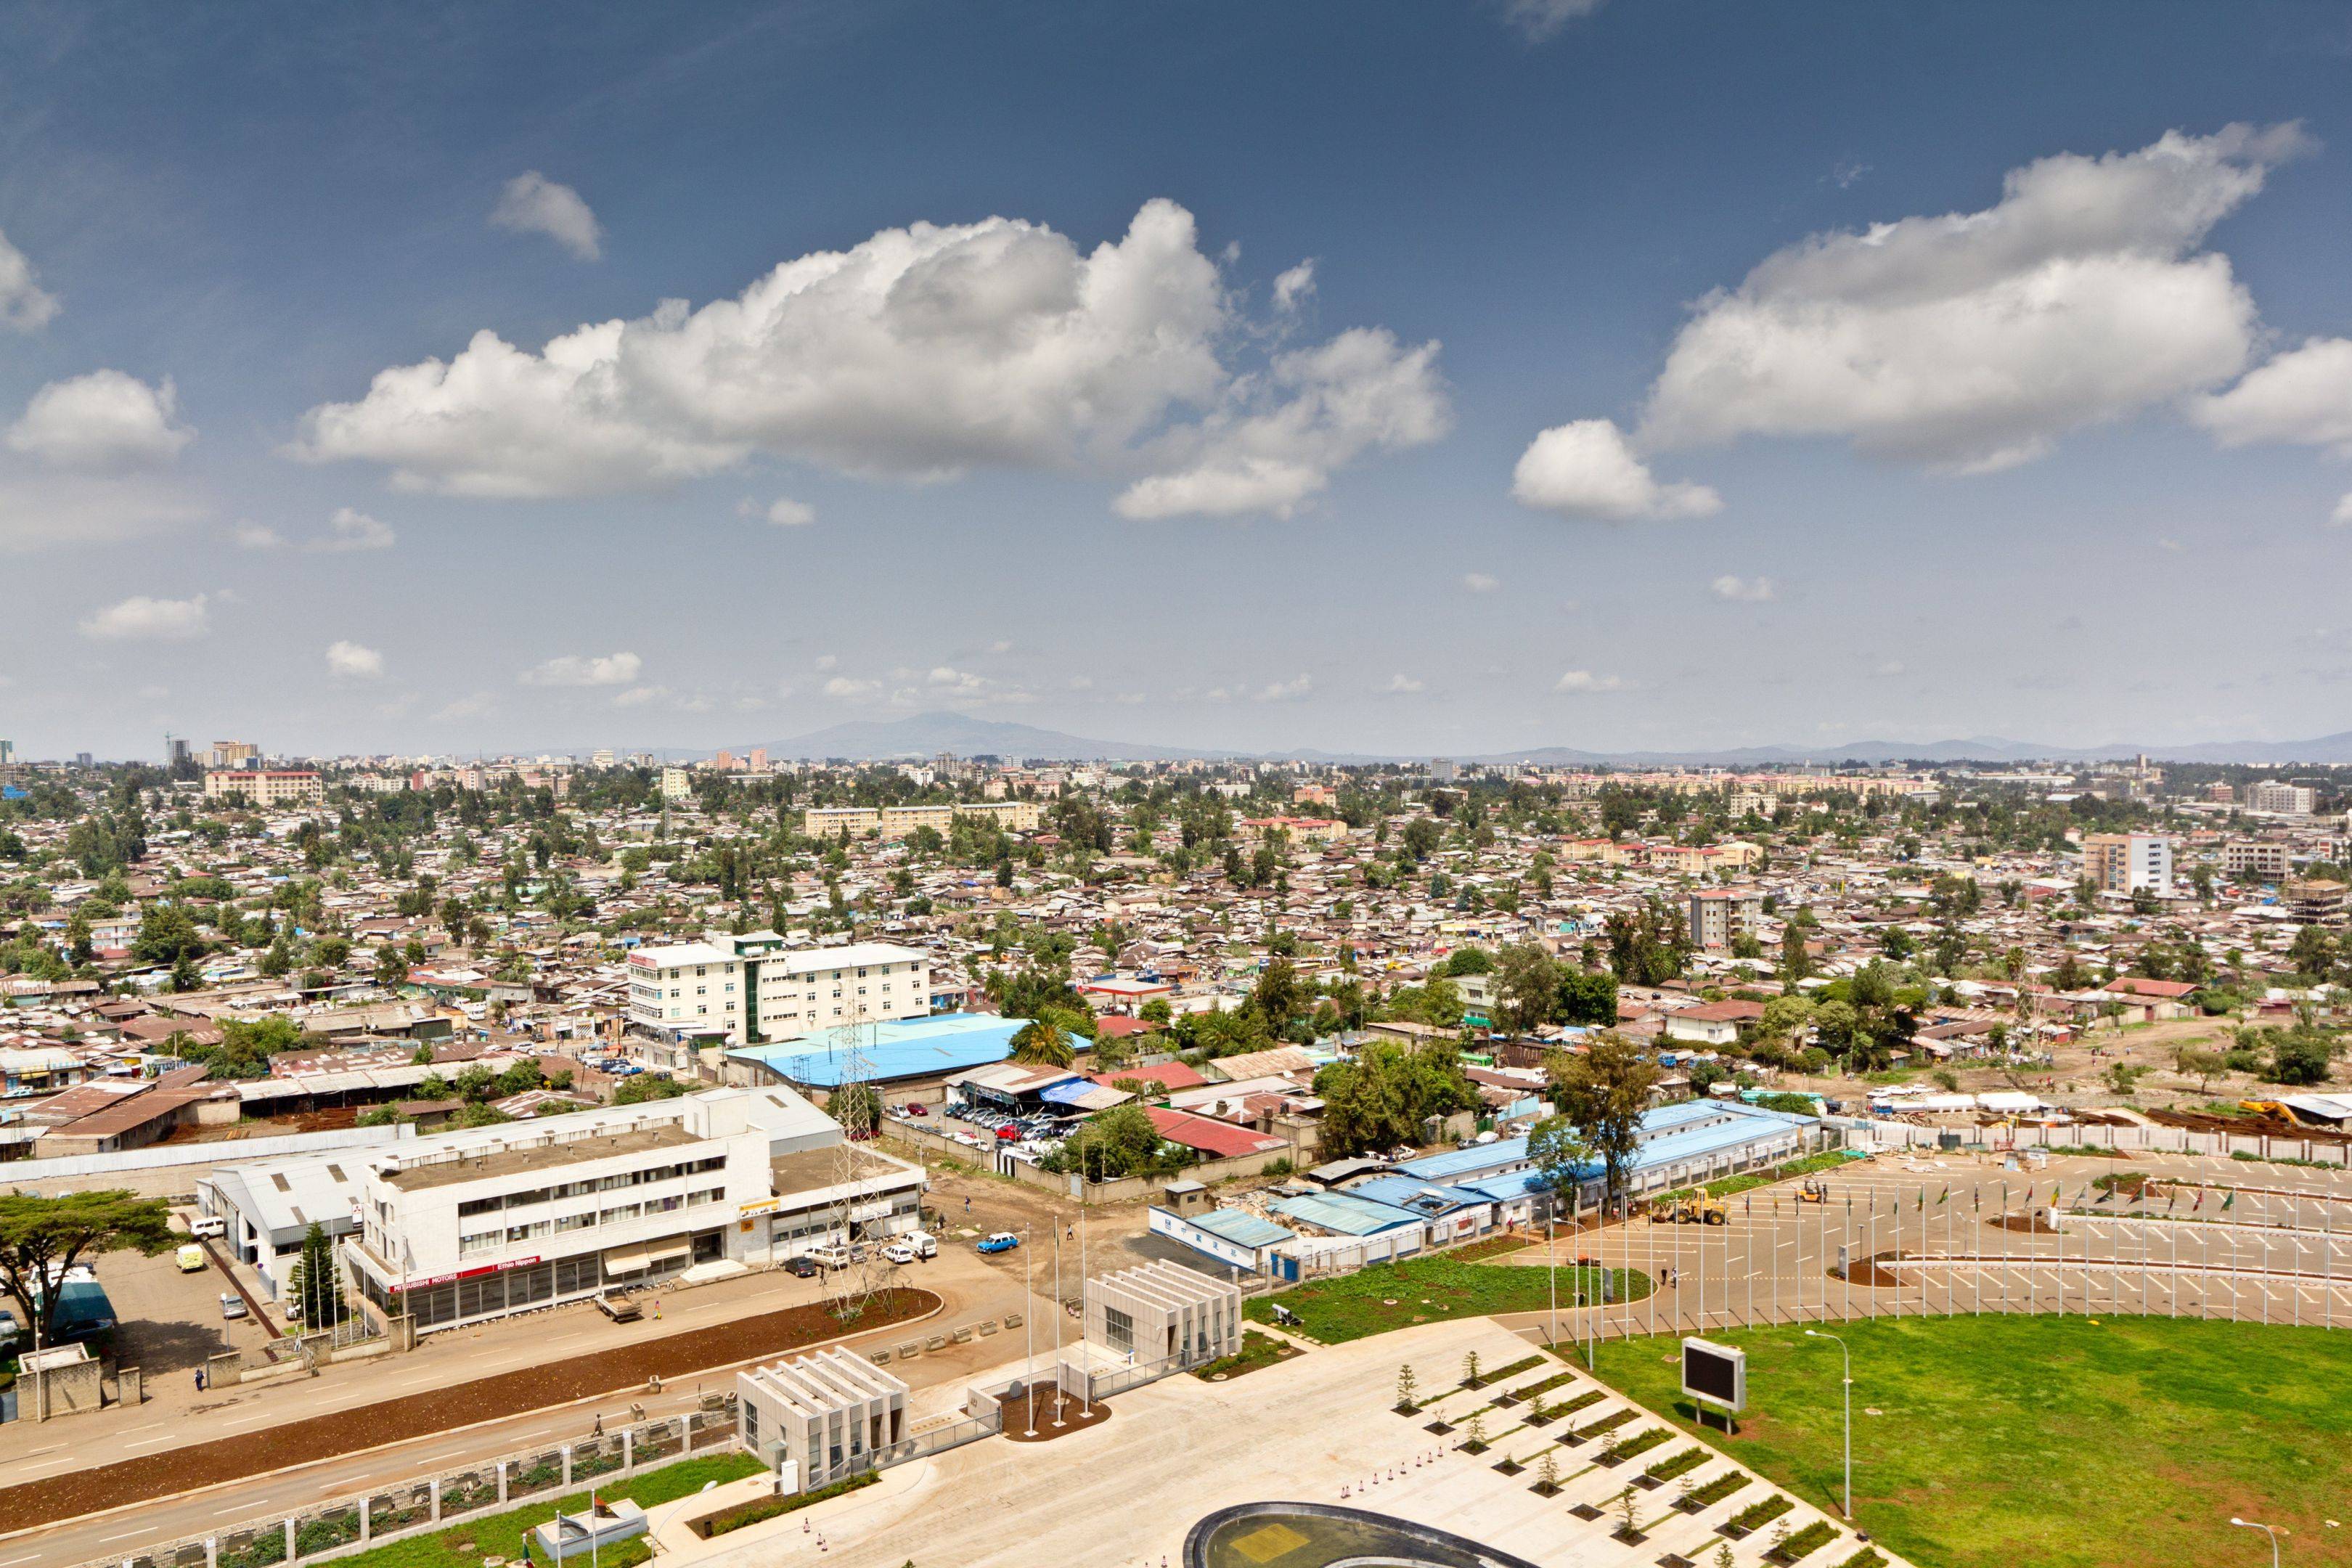 Llegada a Addis Abeba y visita a la capital